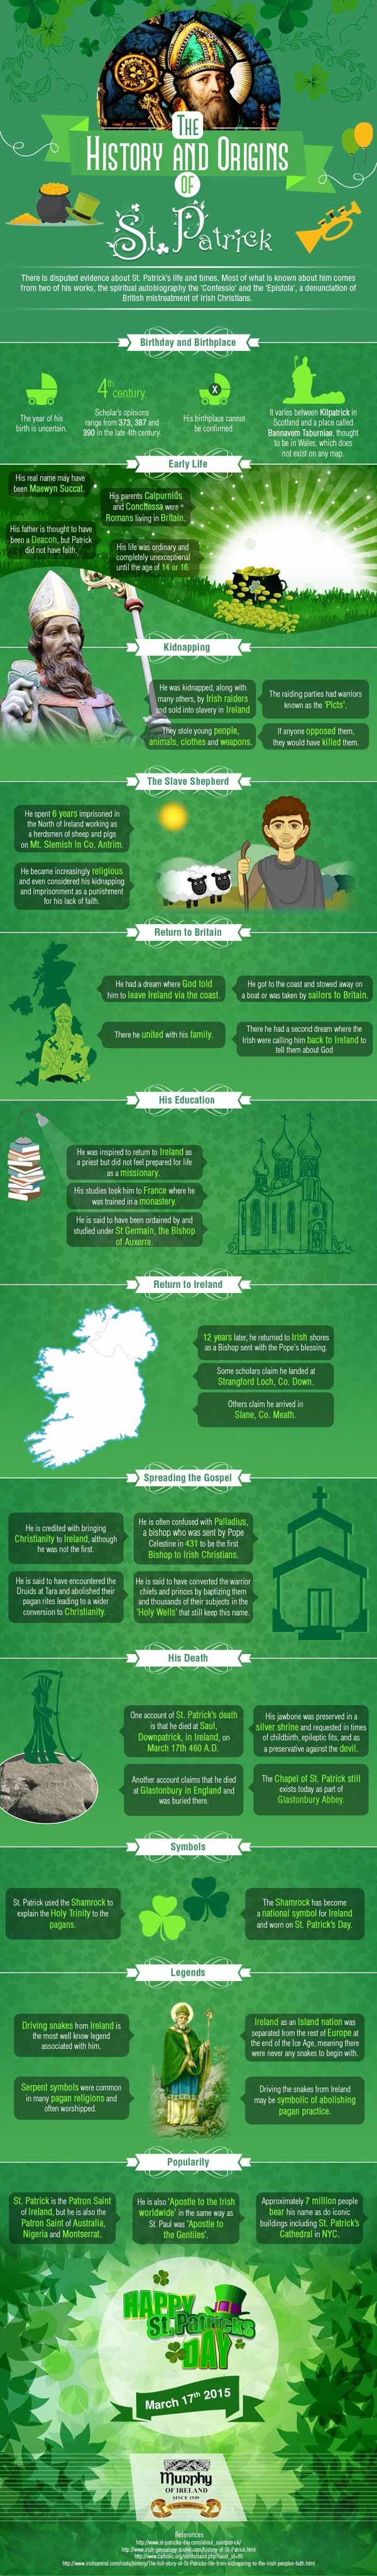 facts about st. patrick, patron saint of ireland